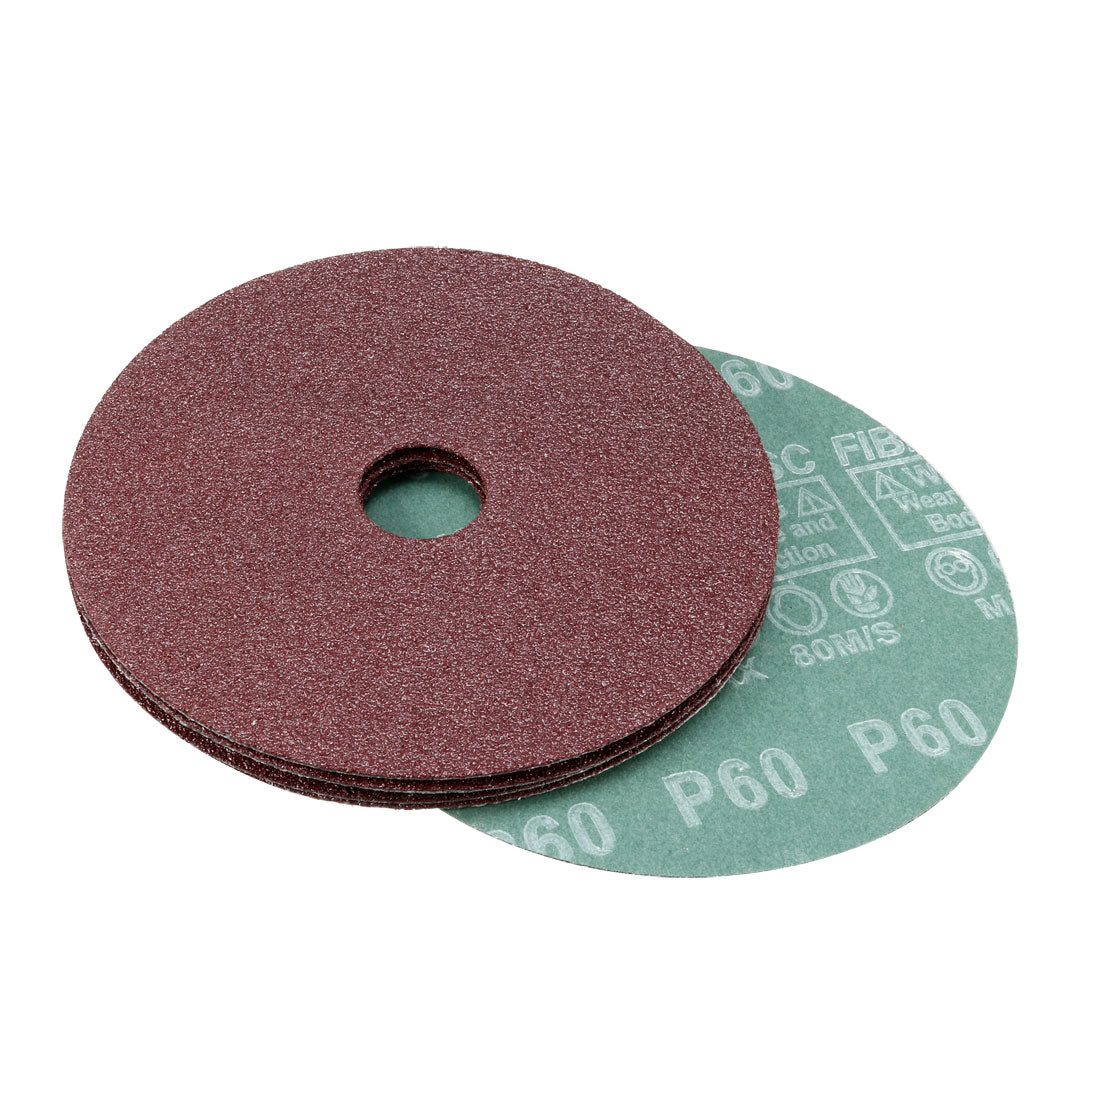 Uxcell Uxcell 5-Inch x 7/8-Inch Aluminum Oxide Resin Fiber Discs, Center Hole 120 Grit Sanding Grinding Discs, 10 Pcs